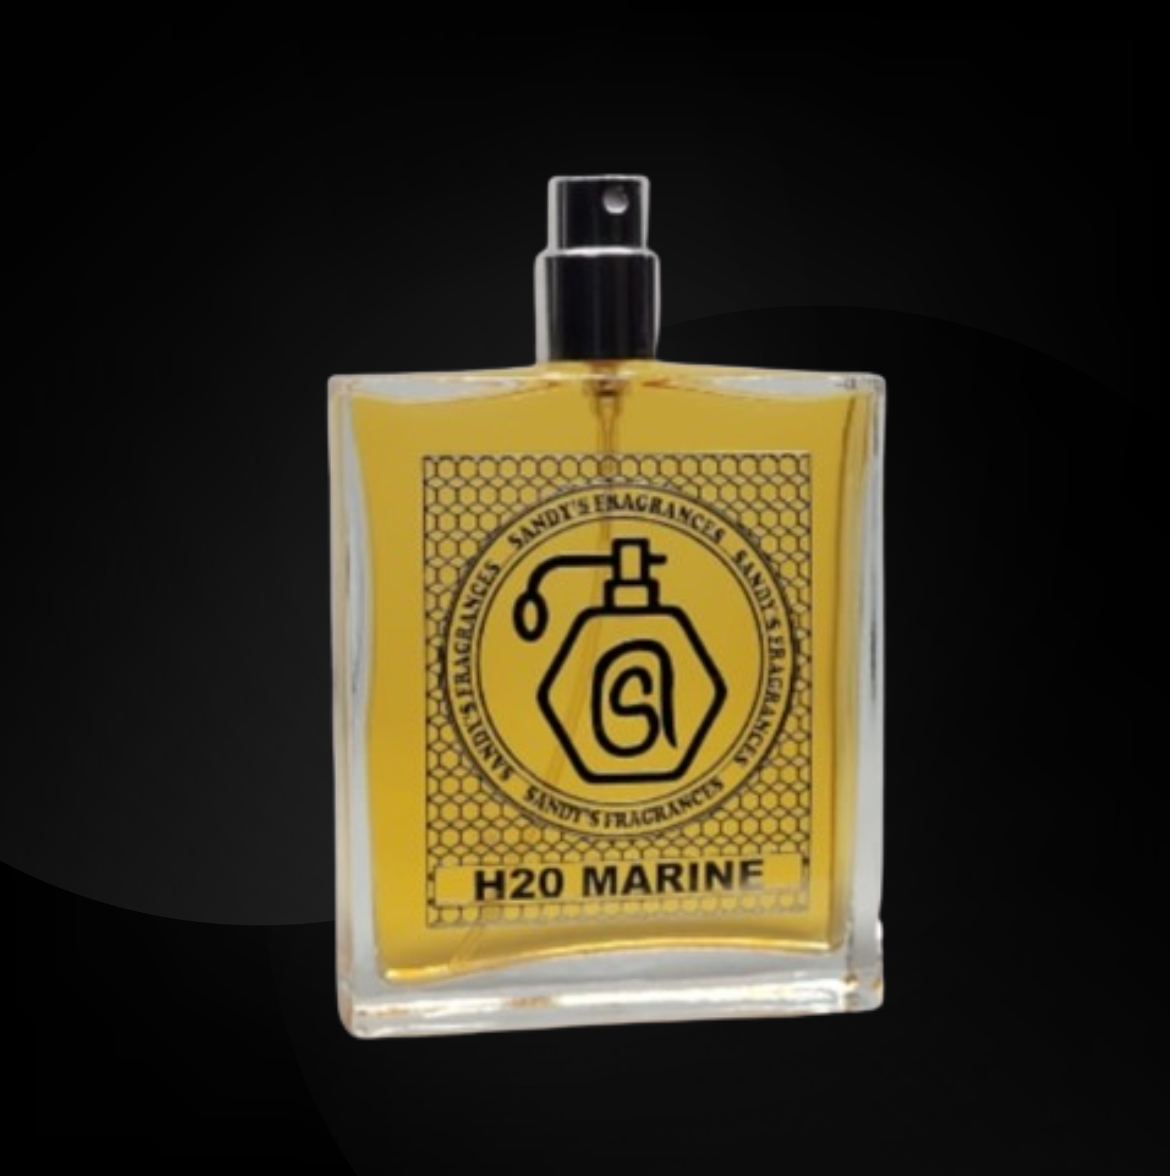 H2O MARINE by Sandy’s fragrance